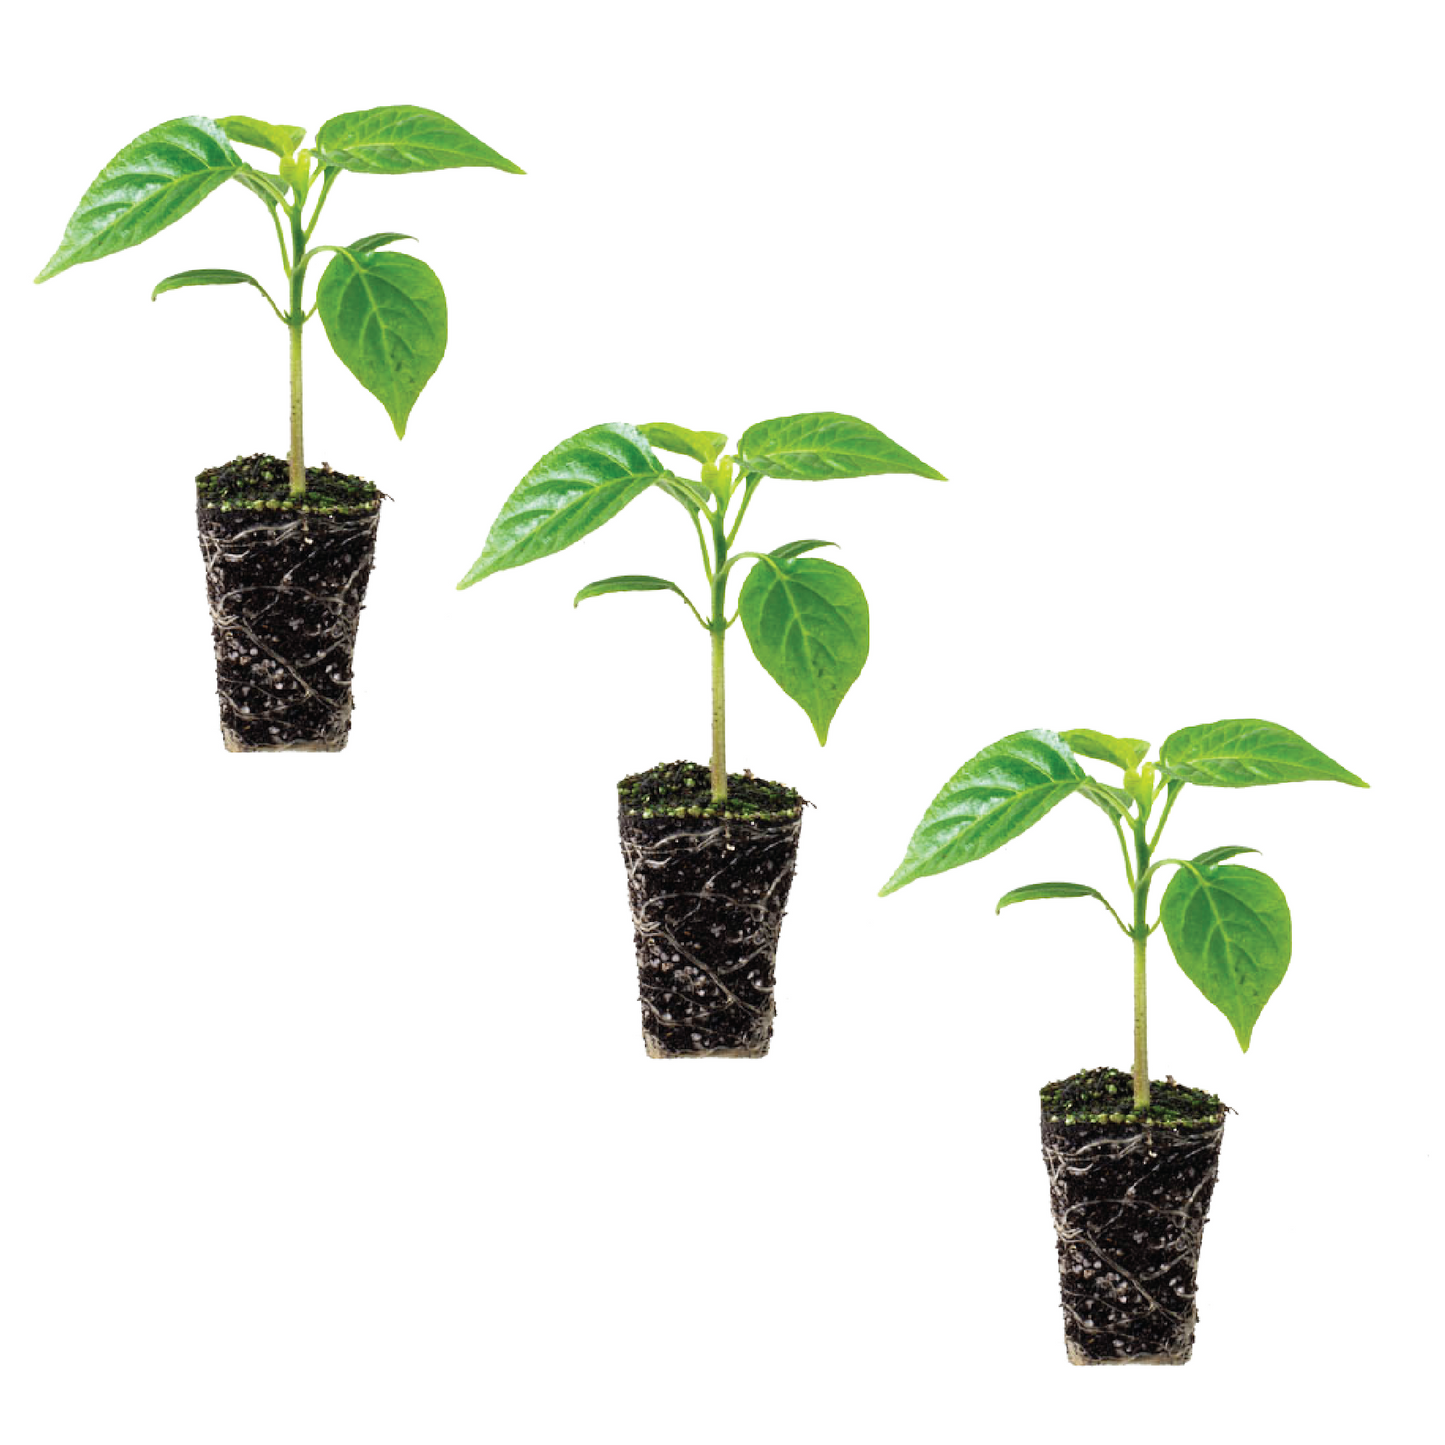 Pepper Bell California Wonder Plantlings Live Baby Plants 1-3in., 3-Pack